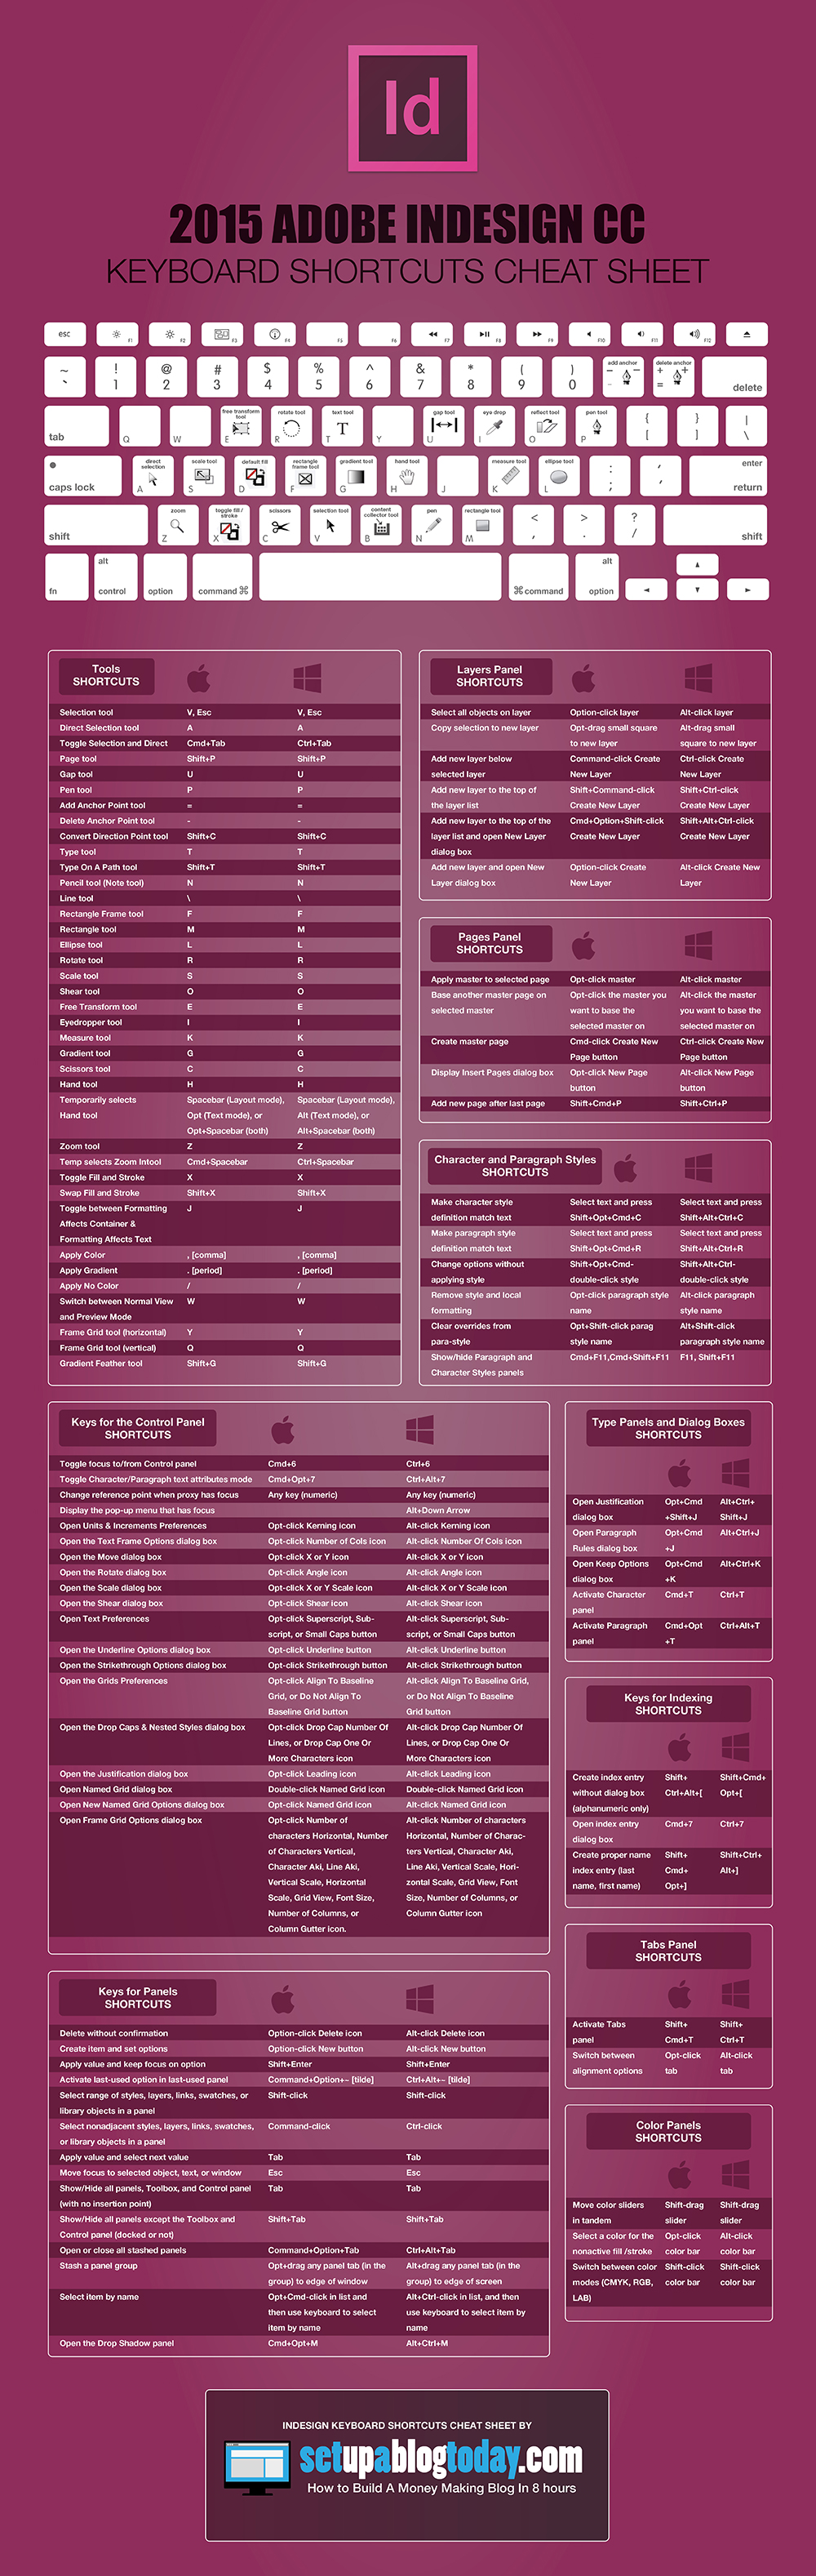 2015-indesign-keyboard-shortcuts-cheat-sheet.jpg